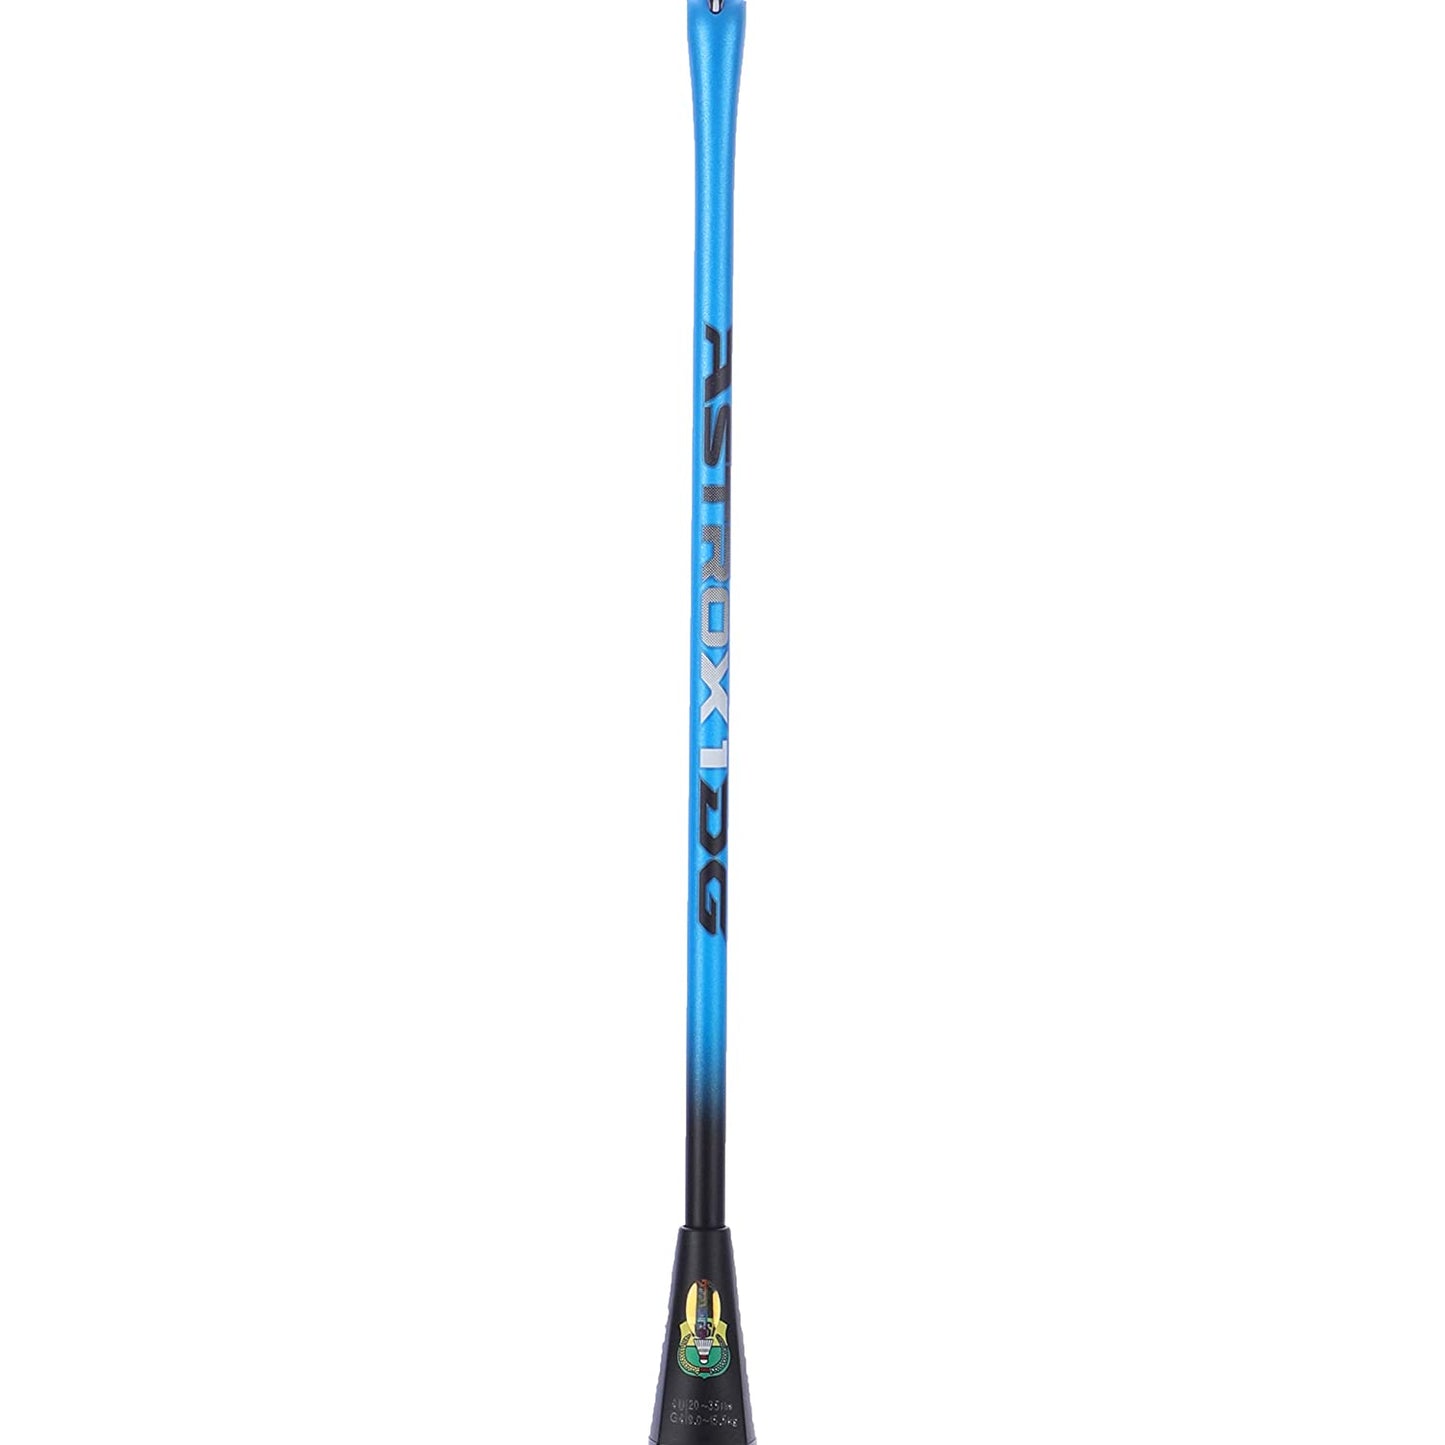 Yonex Astrox 1 DG Strung Badminton Racquet, 4U5 (Blue/Black) - Best Price online Prokicksports.com